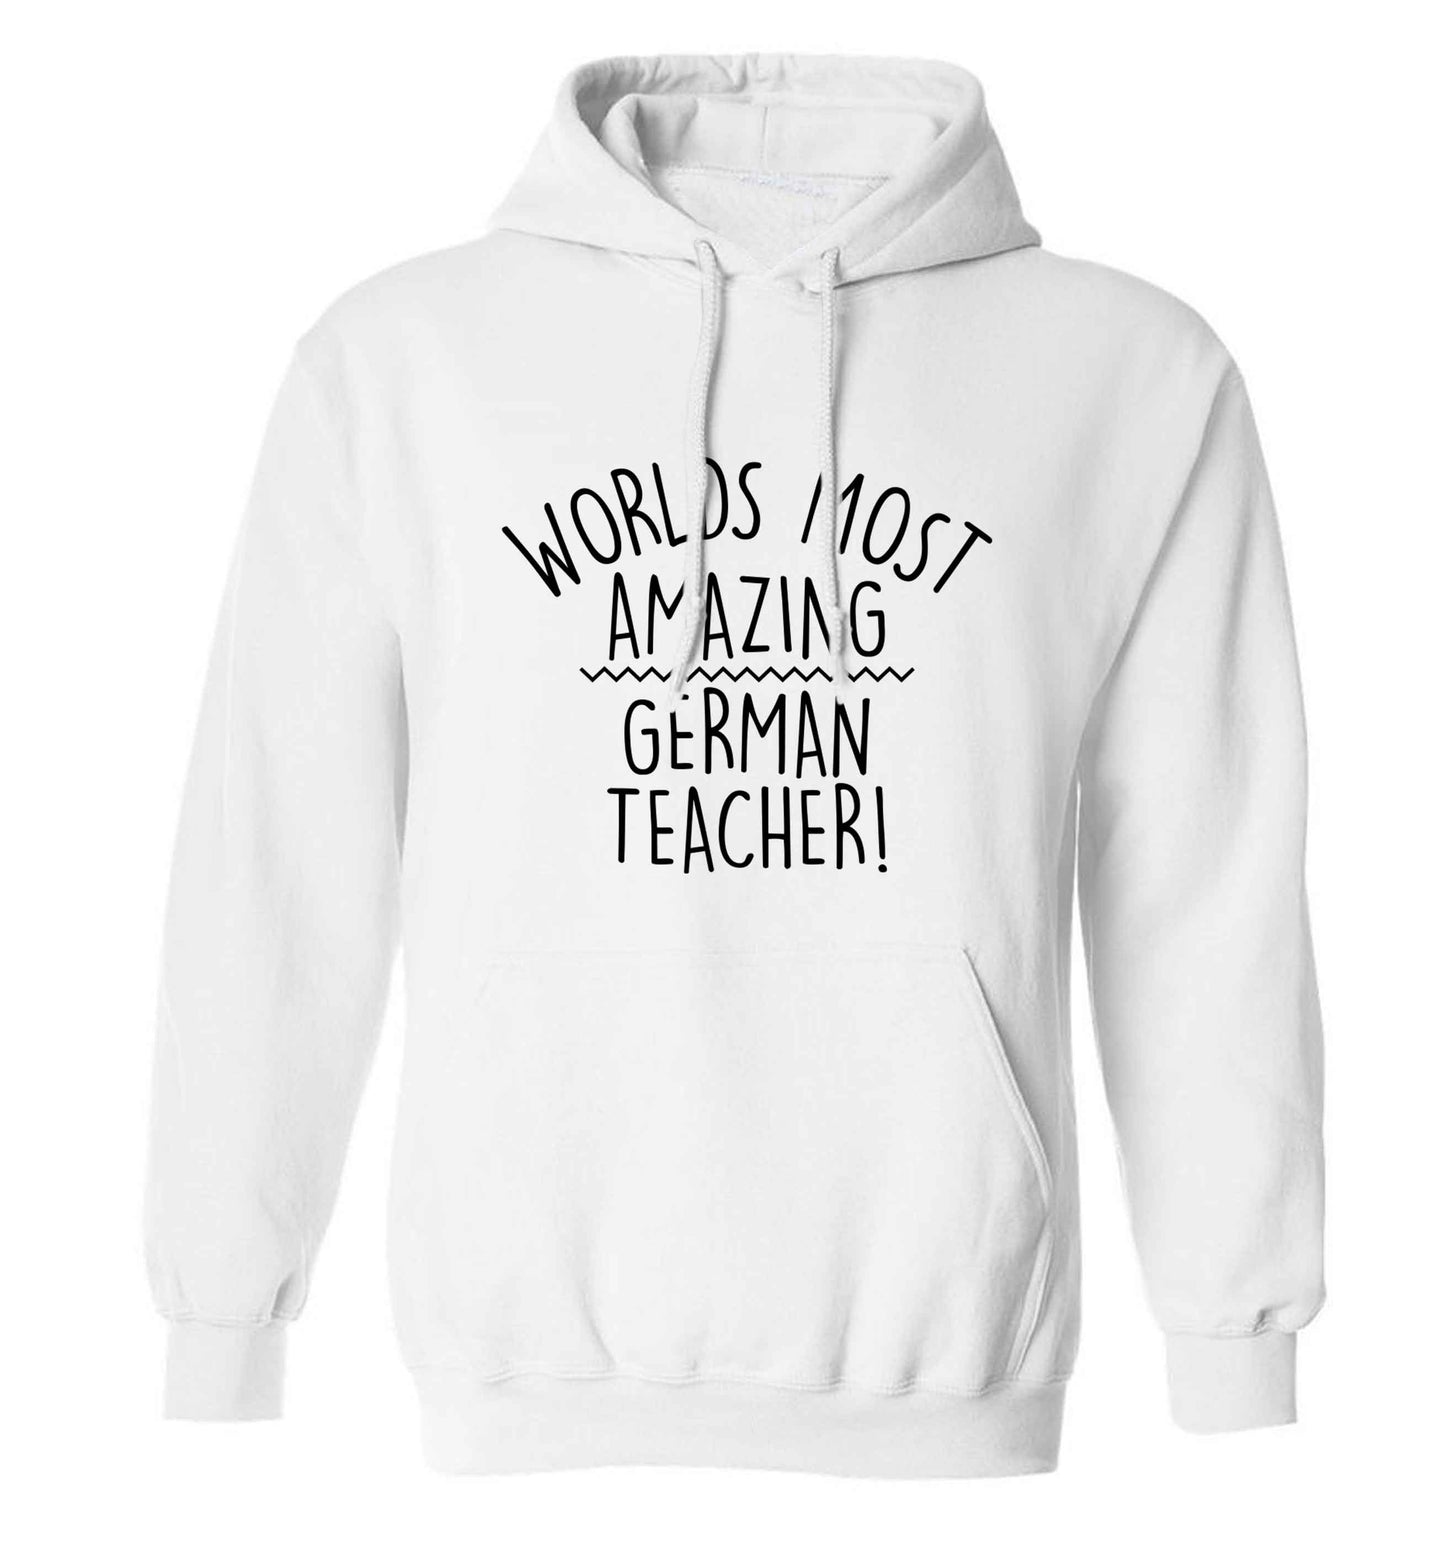 Worlds most amazing German teacher adults unisex white hoodie 2XL